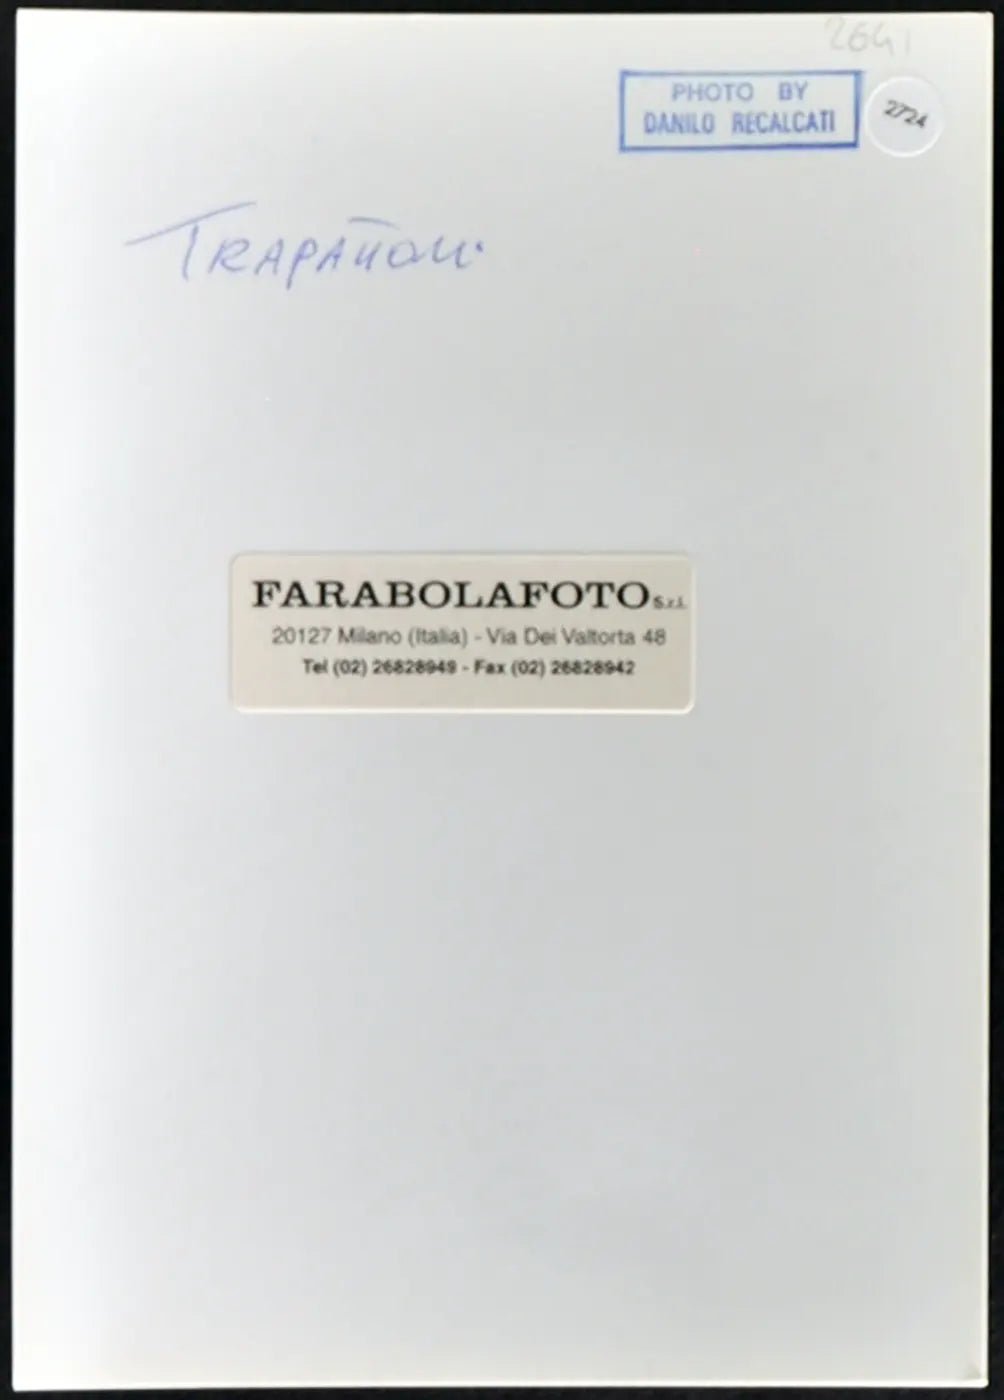 Trapattoni Juventus 1990-1991 Ft 2724 - Stampa 18x13 cm - Farabola Stampa ai sali d'argento